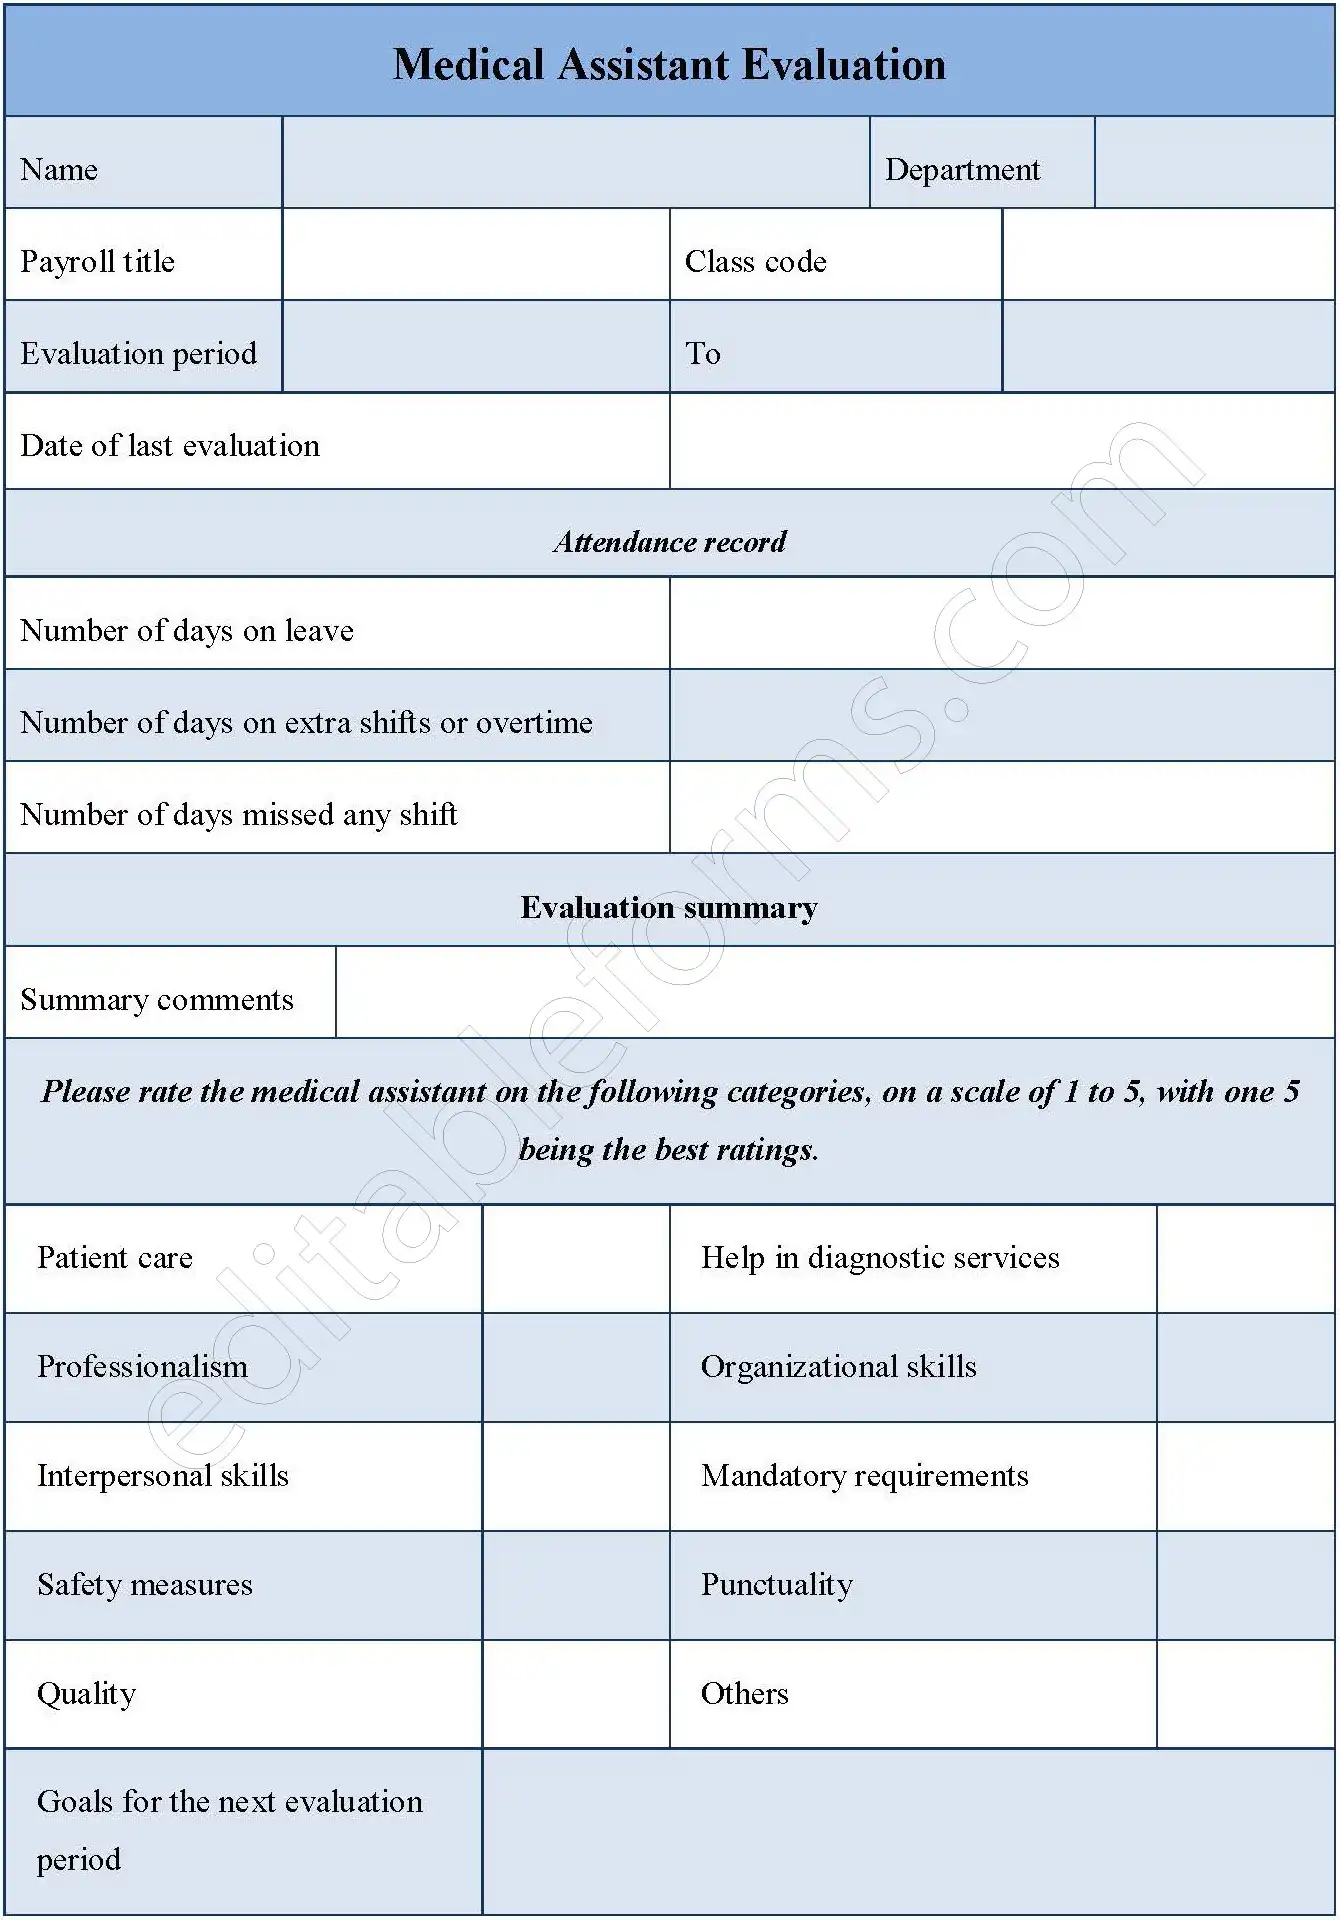 Medical Assistant Evaluation Fillable PDF Form